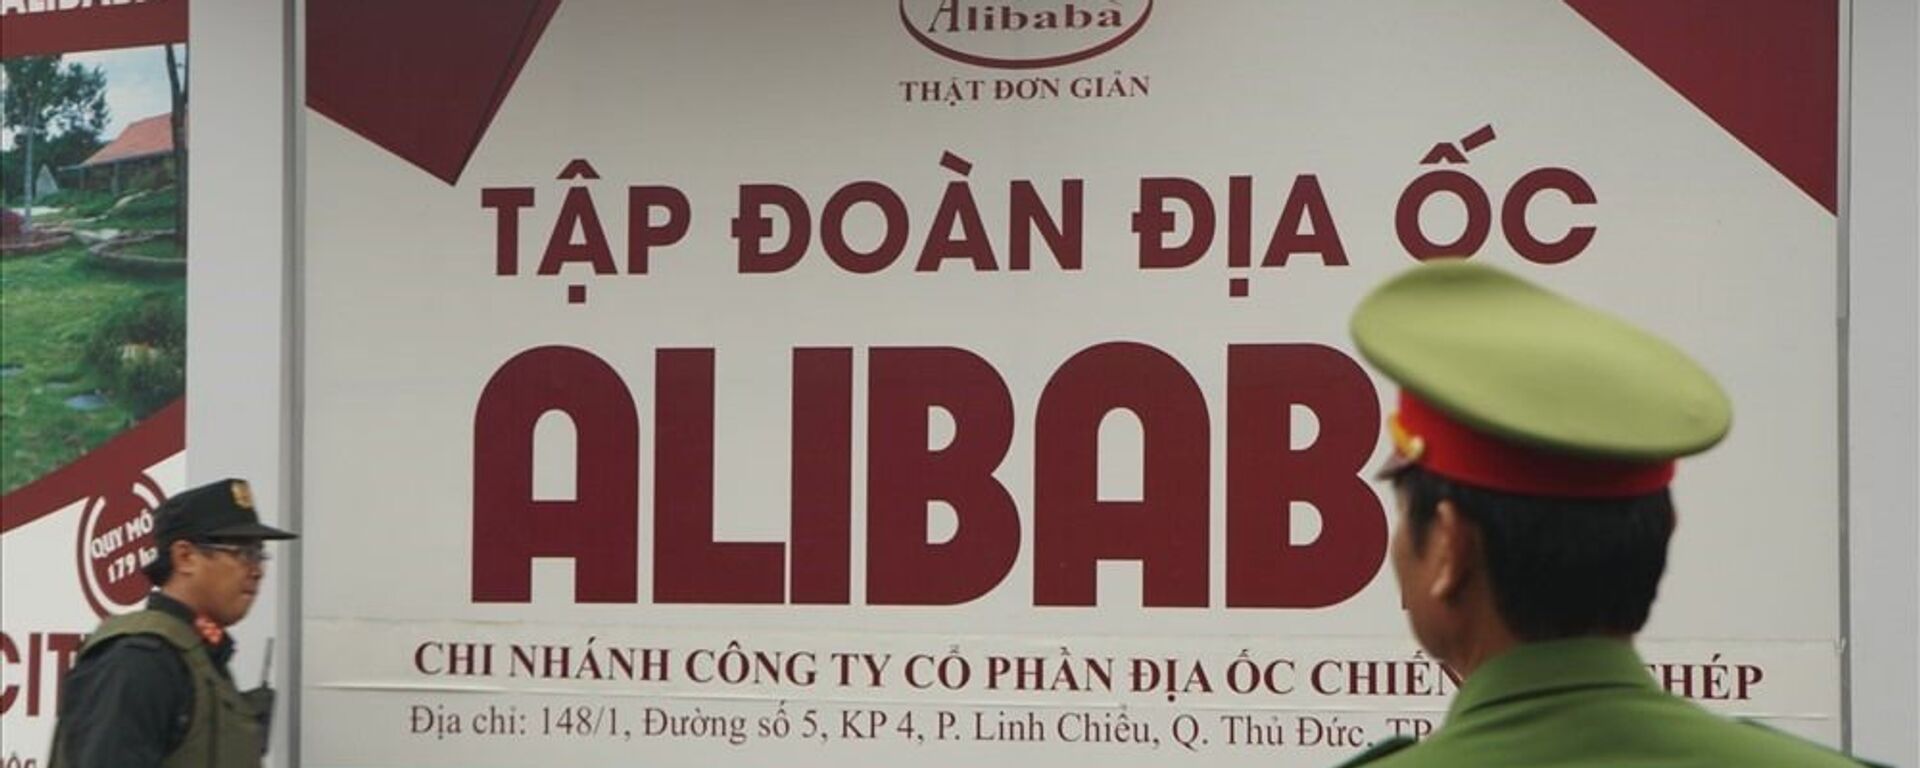 Alibaba - Sputnik Việt Nam, 1920, 13.11.2019